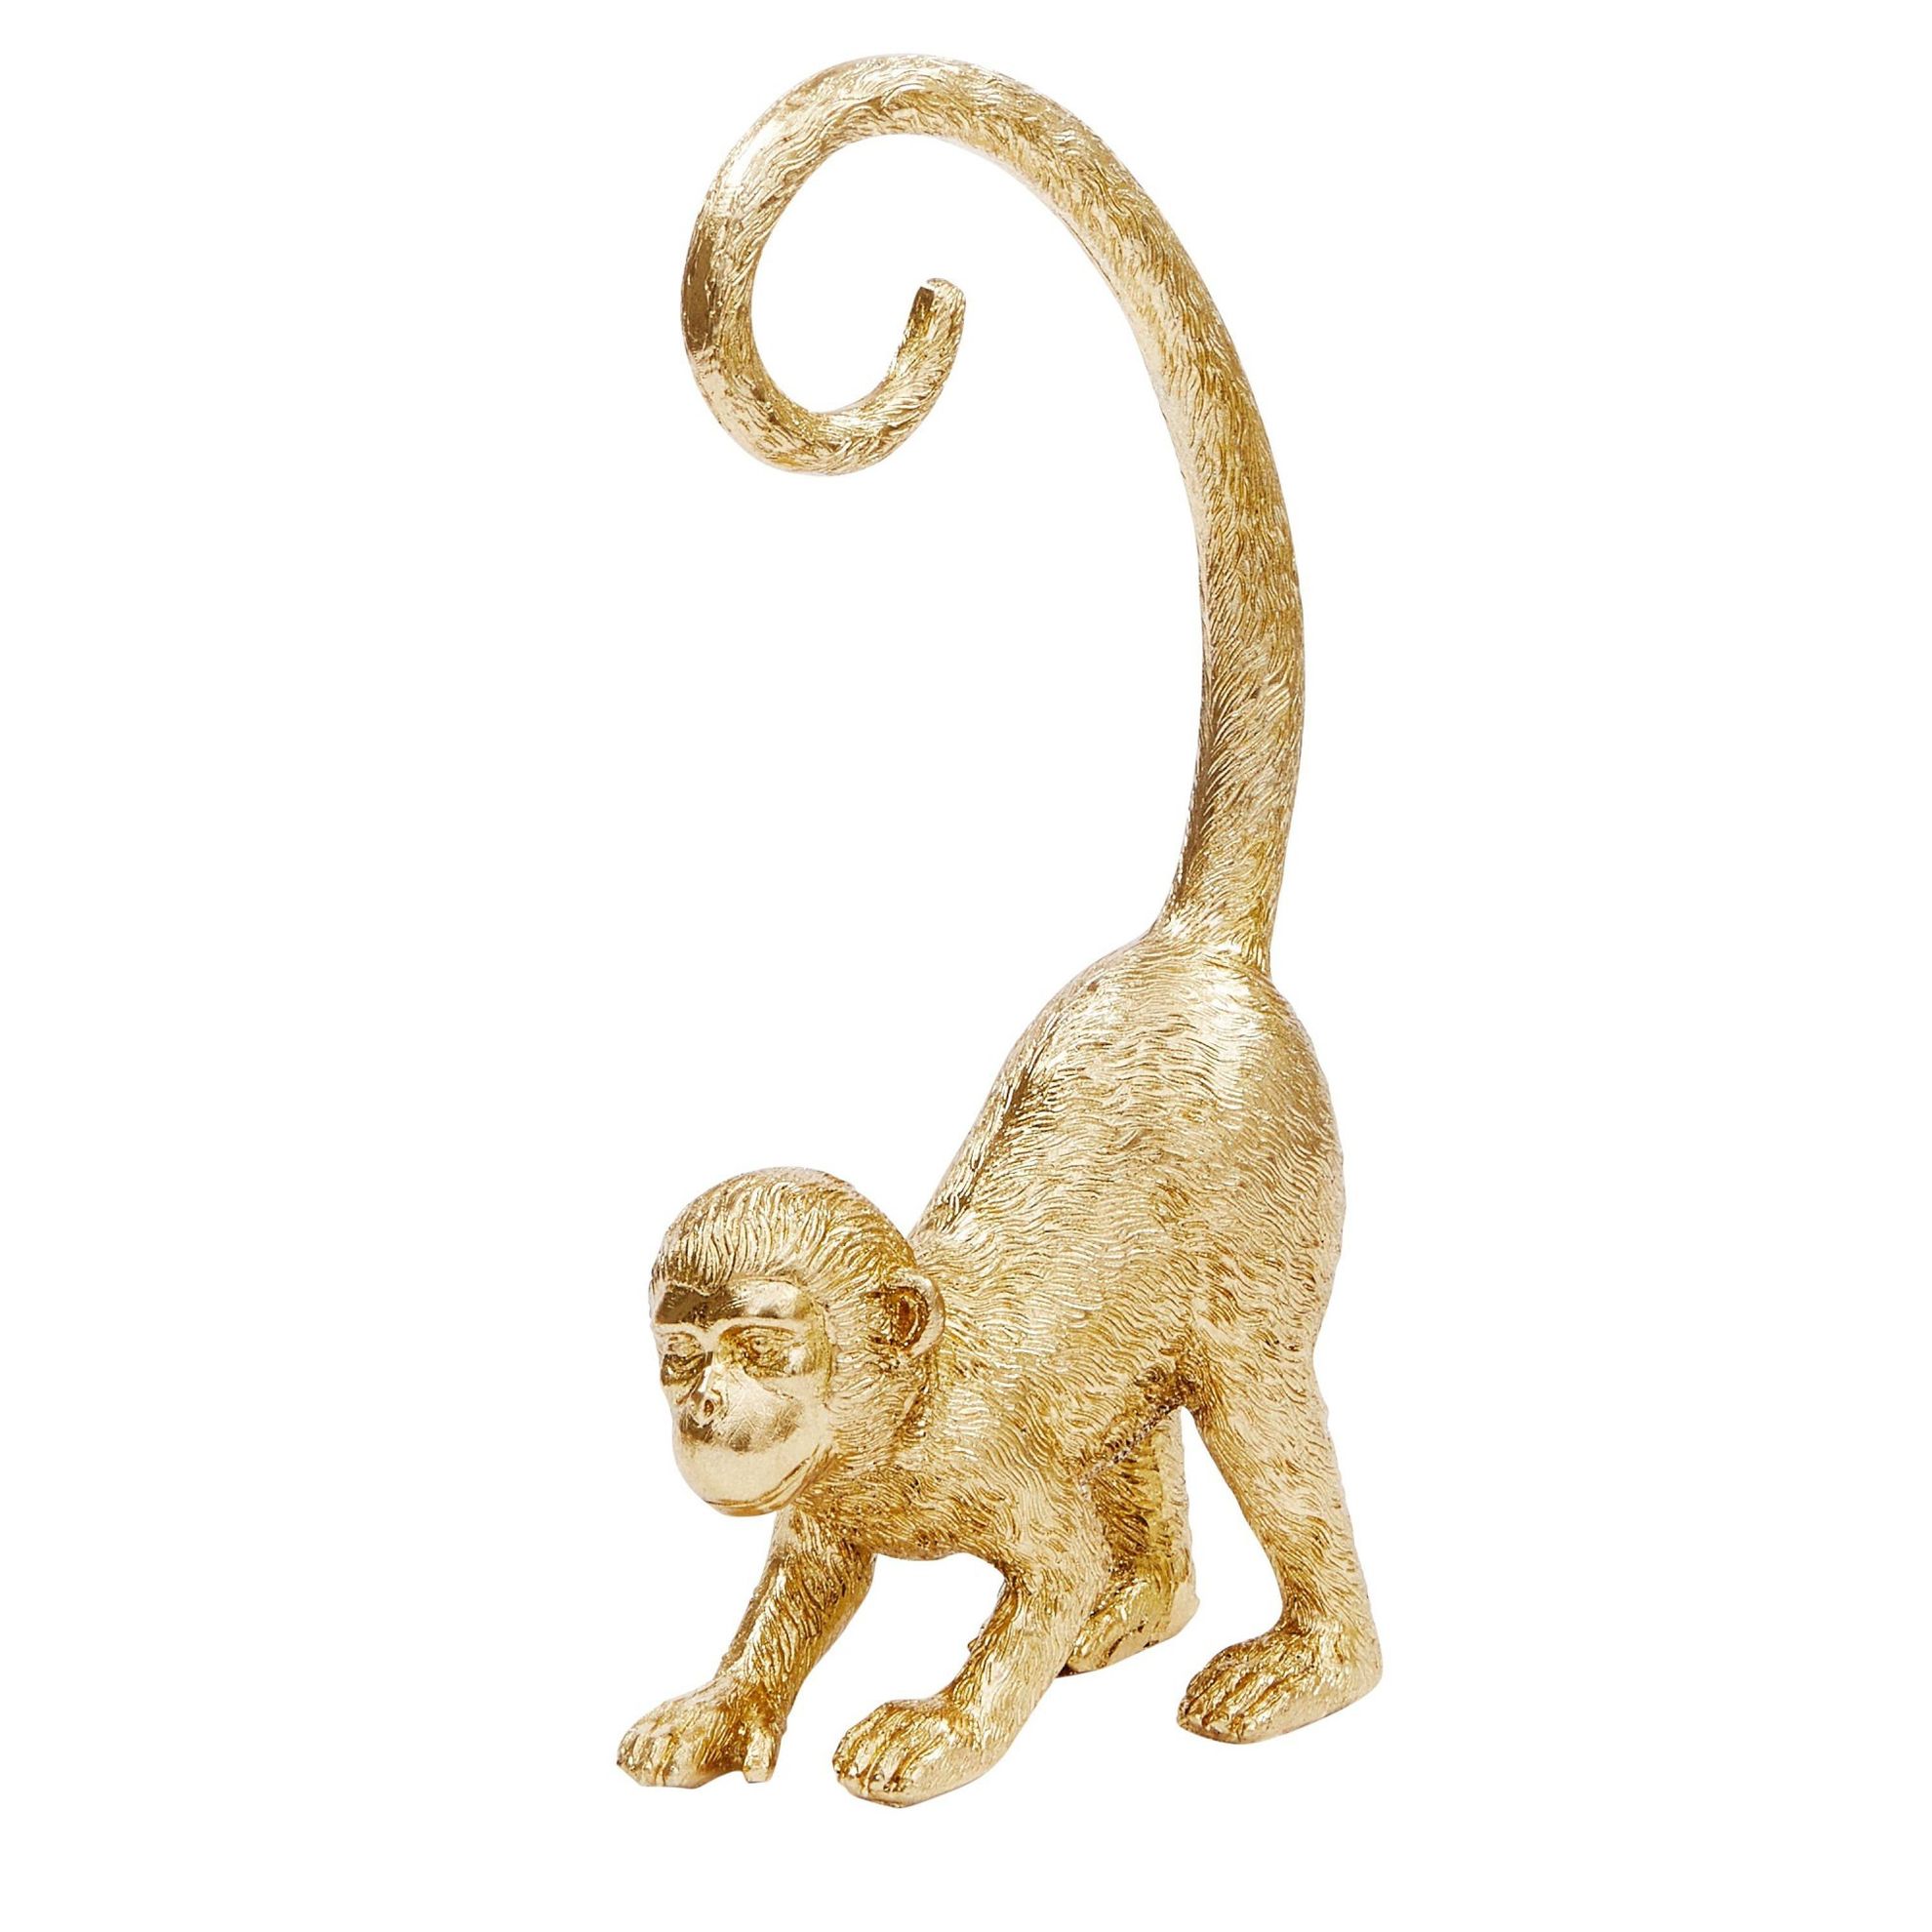 jetzt bei Deko-Figur Affe Goldfarben Weltbild.de bestellen